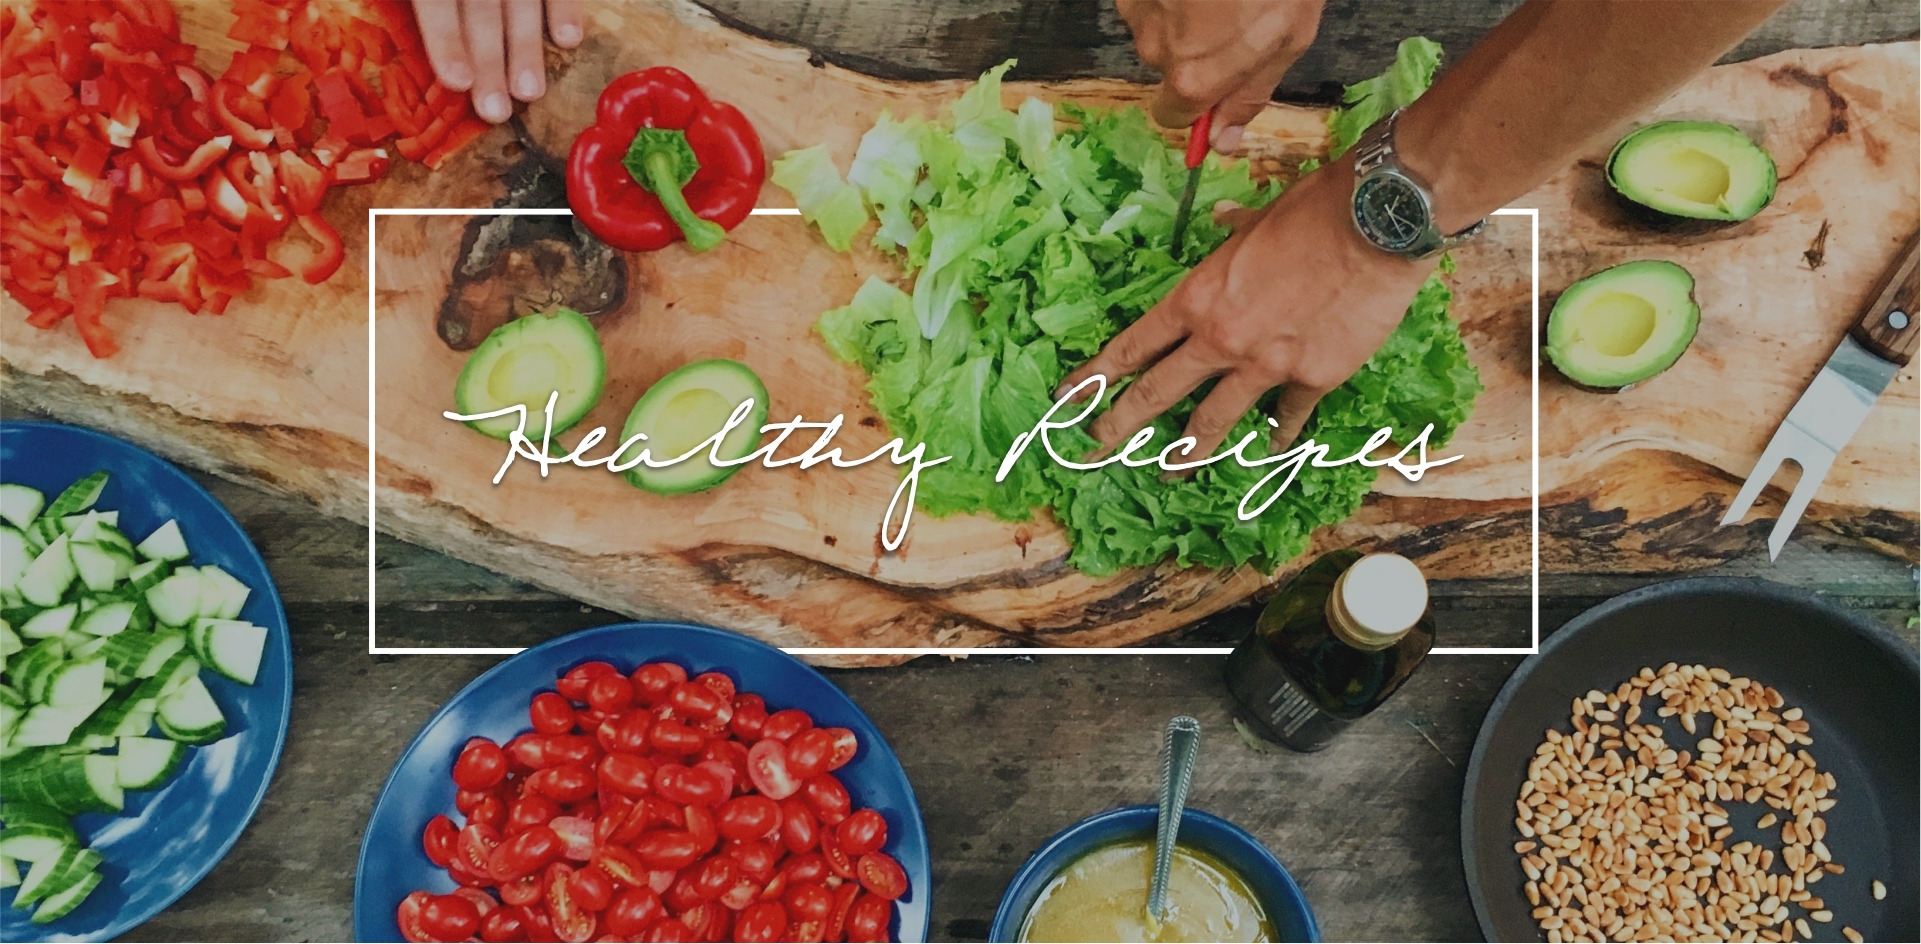 Dietitian healthy recipes